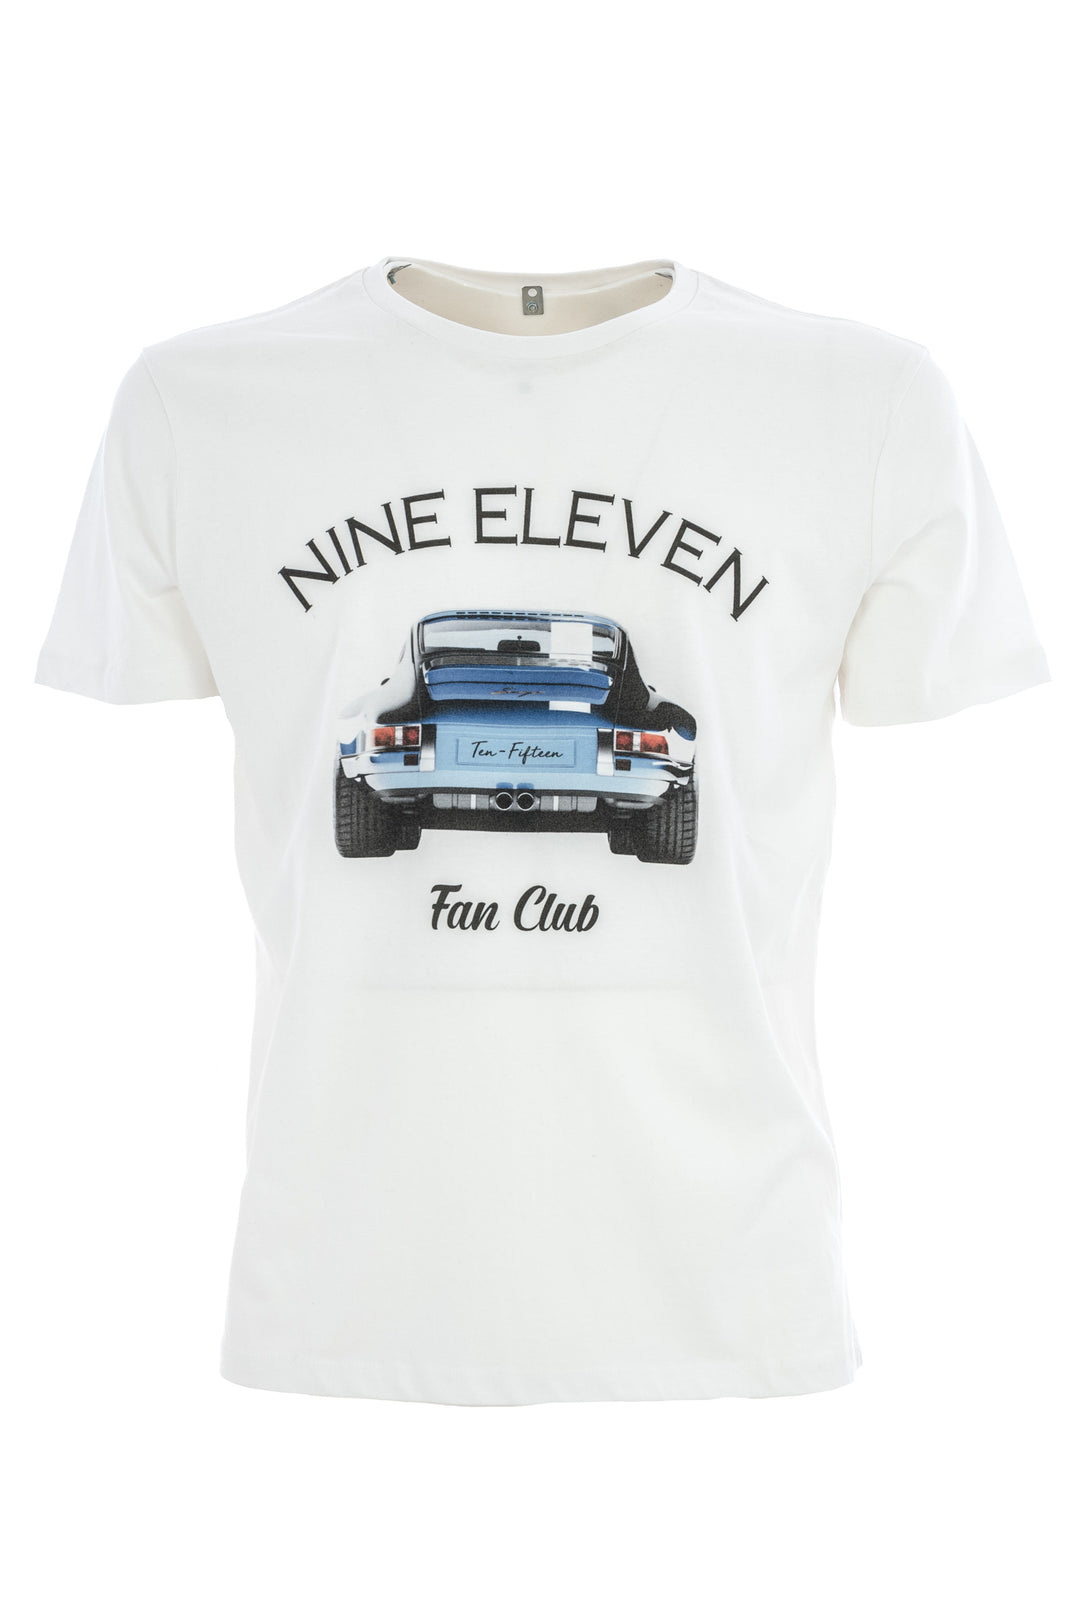 TEN-FIFTEEN T-shirt bianca in cotone con stampa porsche 911 - Mancinelli 1954